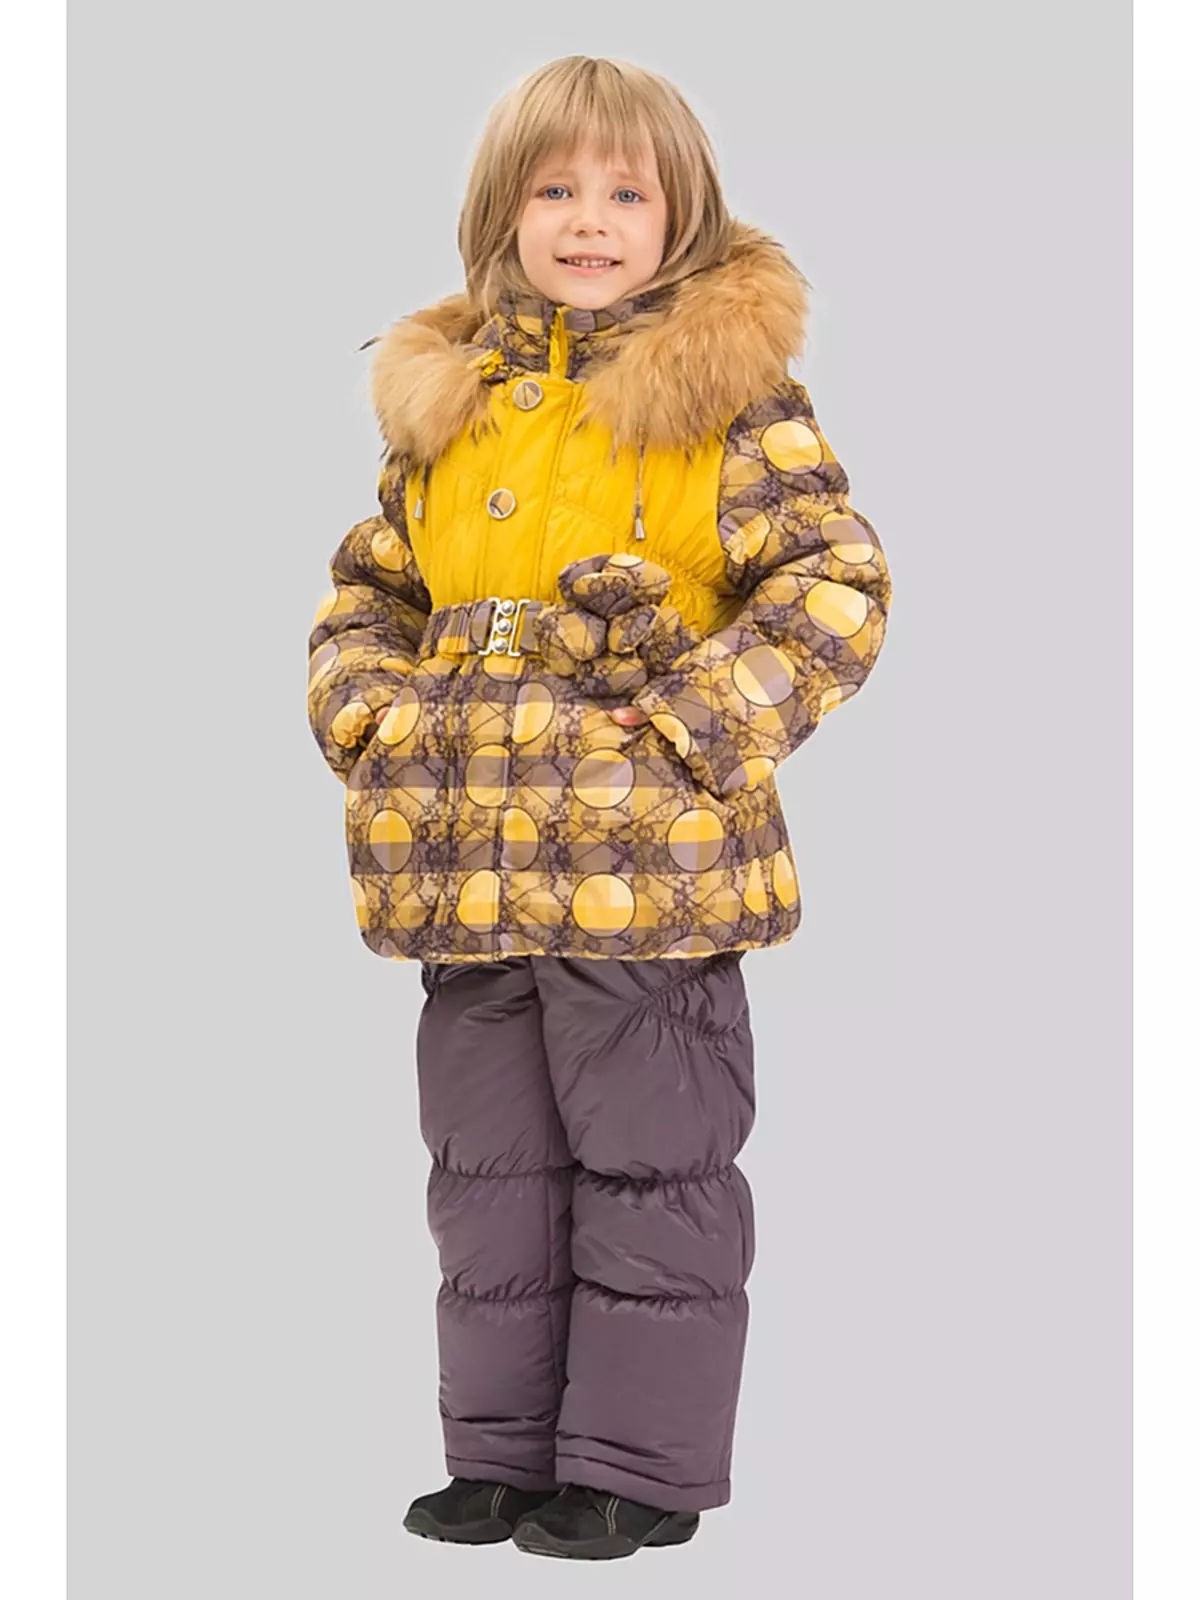 Bilemi (38 تصاویر): بچوں کے کپڑے، موسم سرما کی کٹس اور overalls، برسات اور جیکٹ، برانڈ جائزے 3802_7